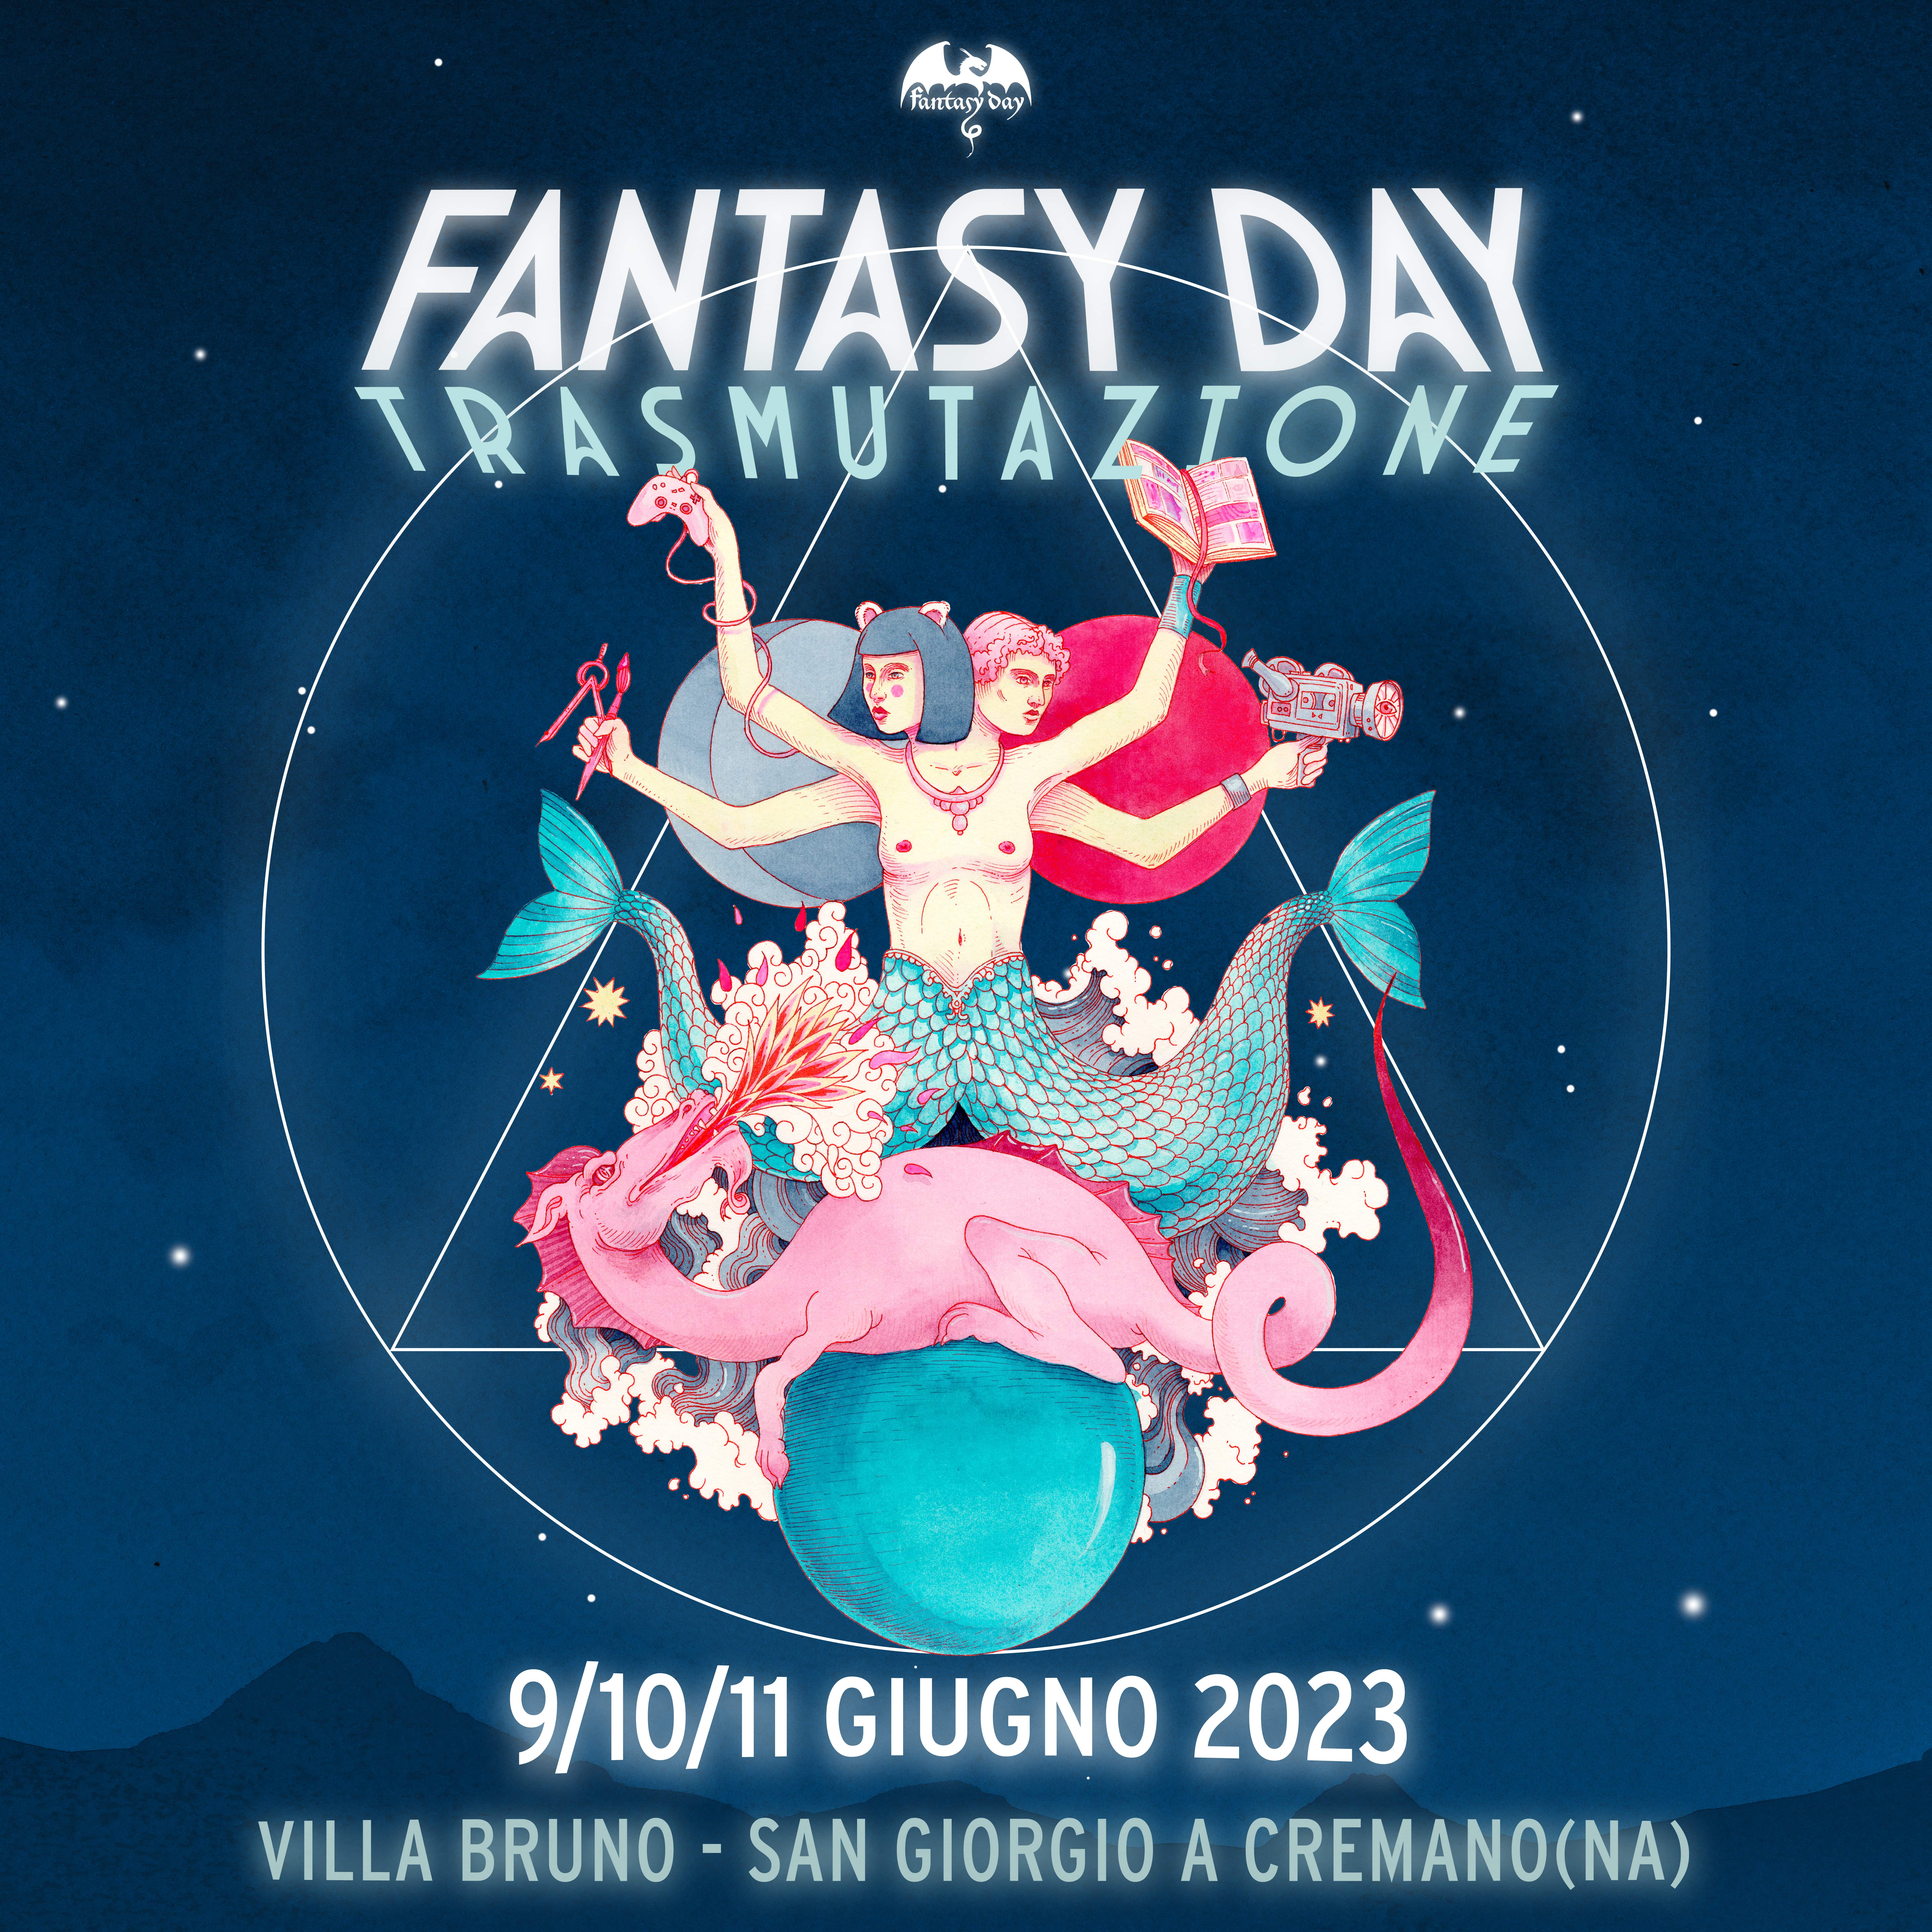 Fantasy Day 2023